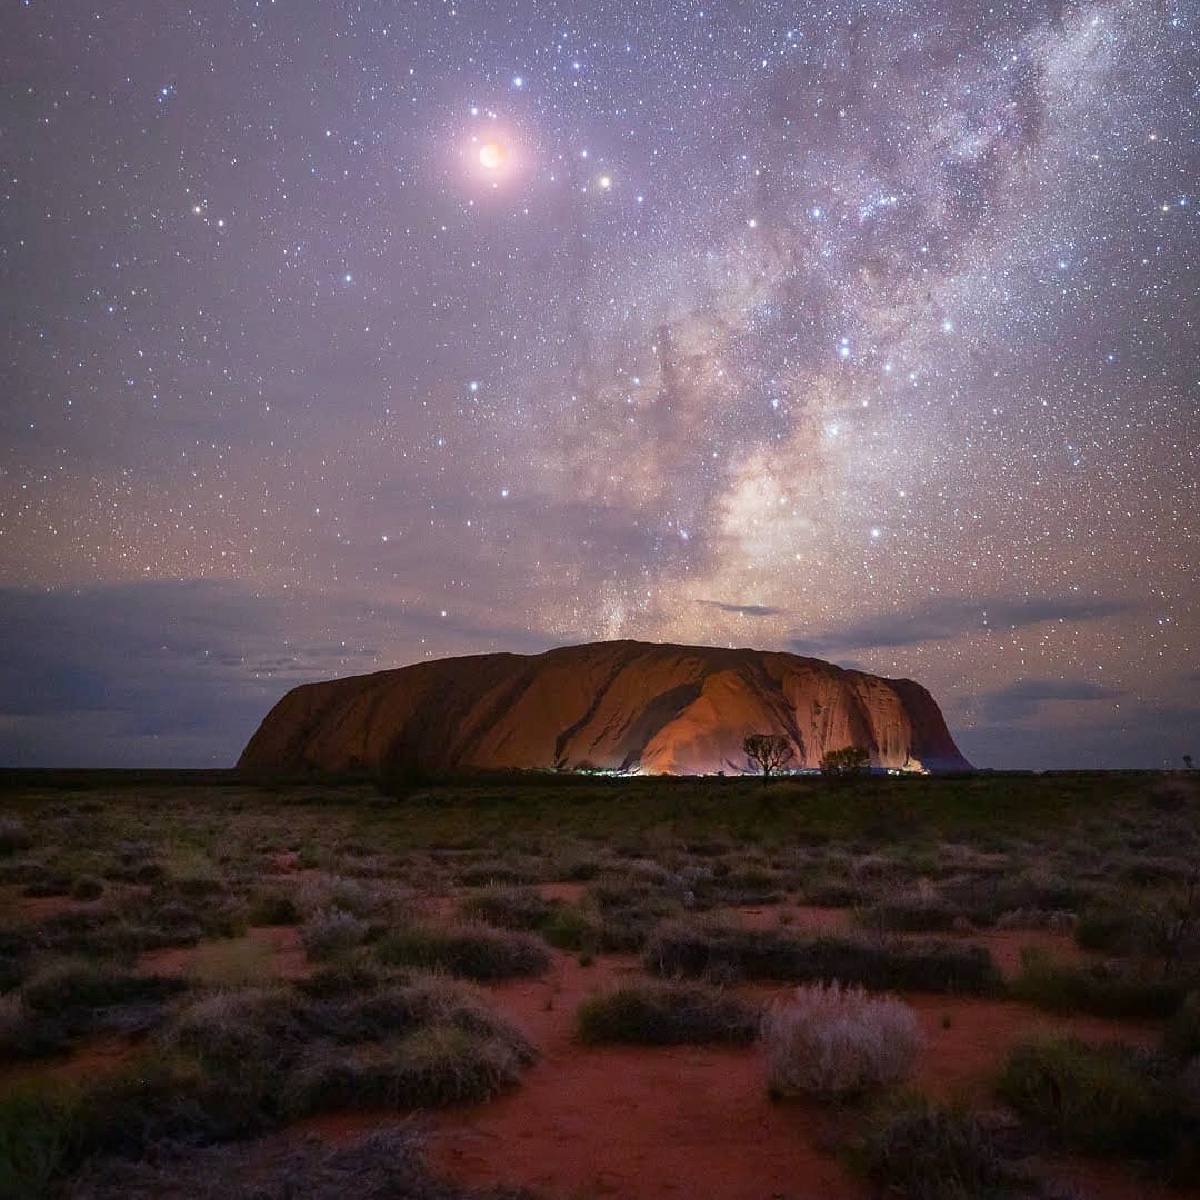 Get ready to be dazzled ✨

Explore the night sky above #Uluru in @NT_Australia's #UluṟuKataTjuṯaNationalPark, with an experienced guide at @SanctuaryNT (📸: IG/caitensphoto).

#seeaustralia